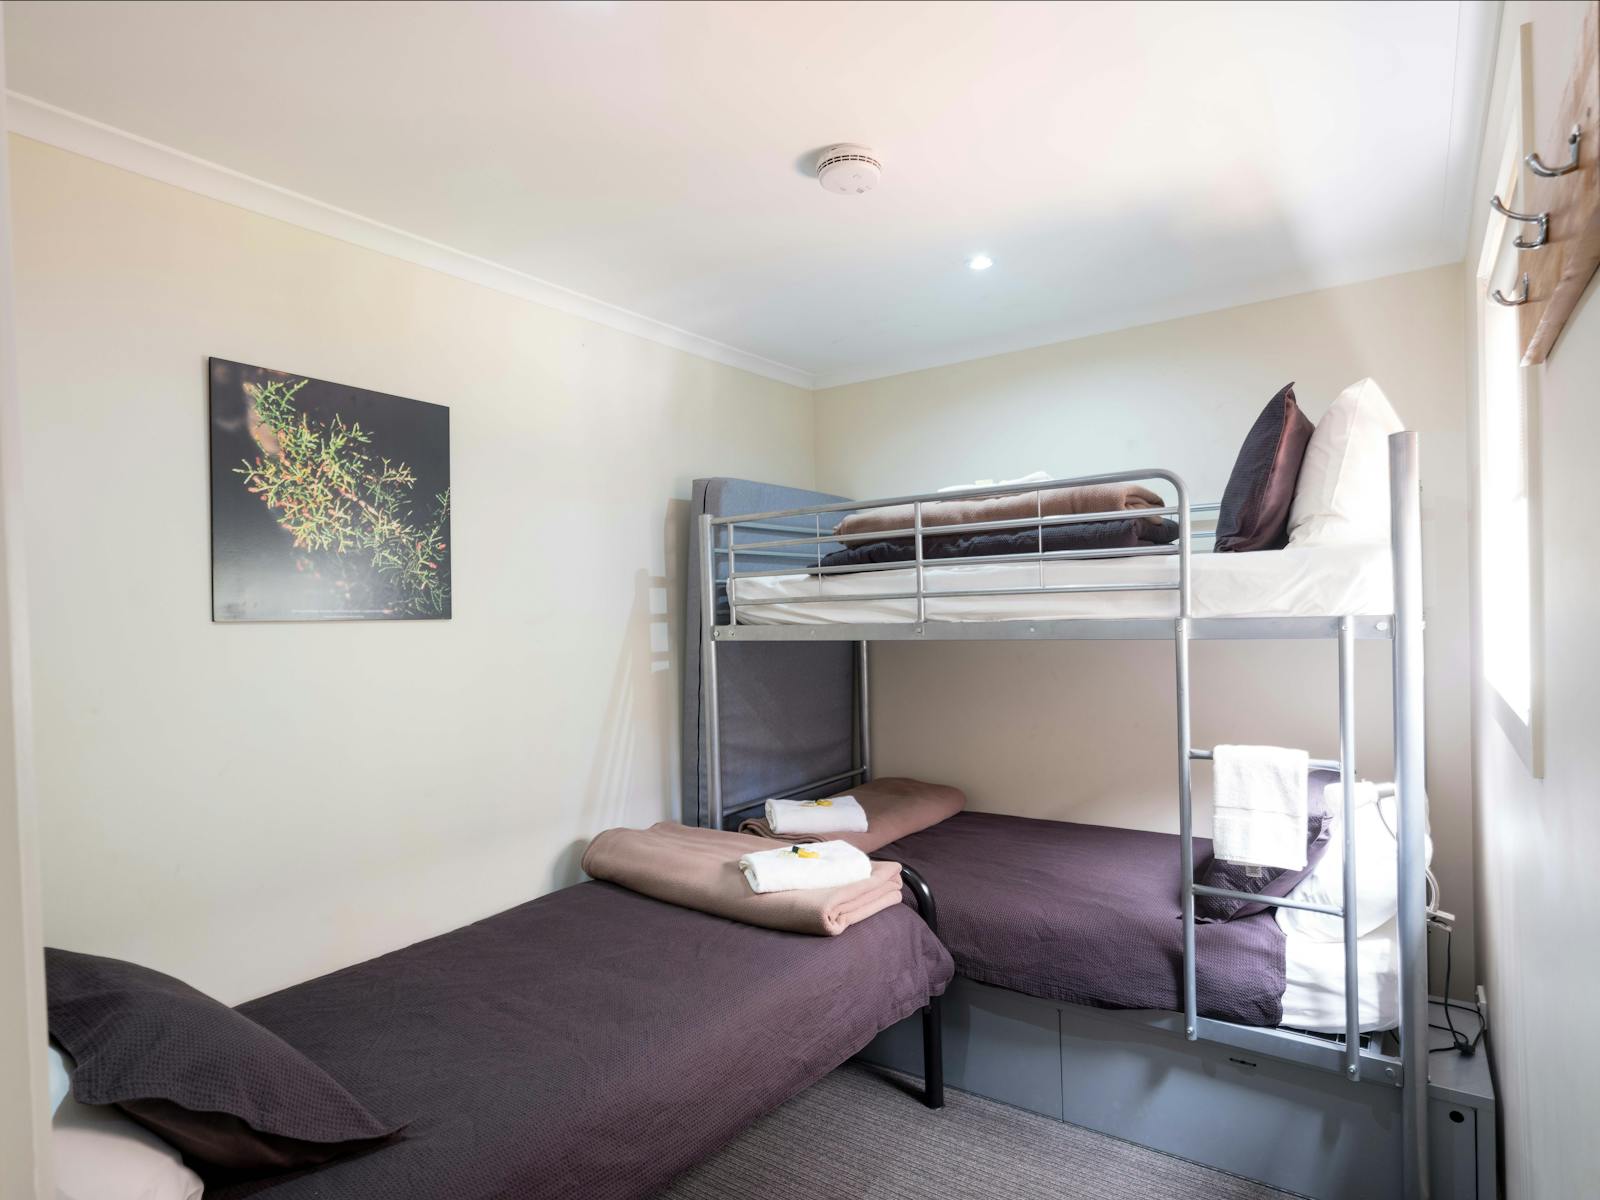 Tahune Adventures Lodge Triple Room, 1 single bed and 1 set of bunks, sleeps 3 people.